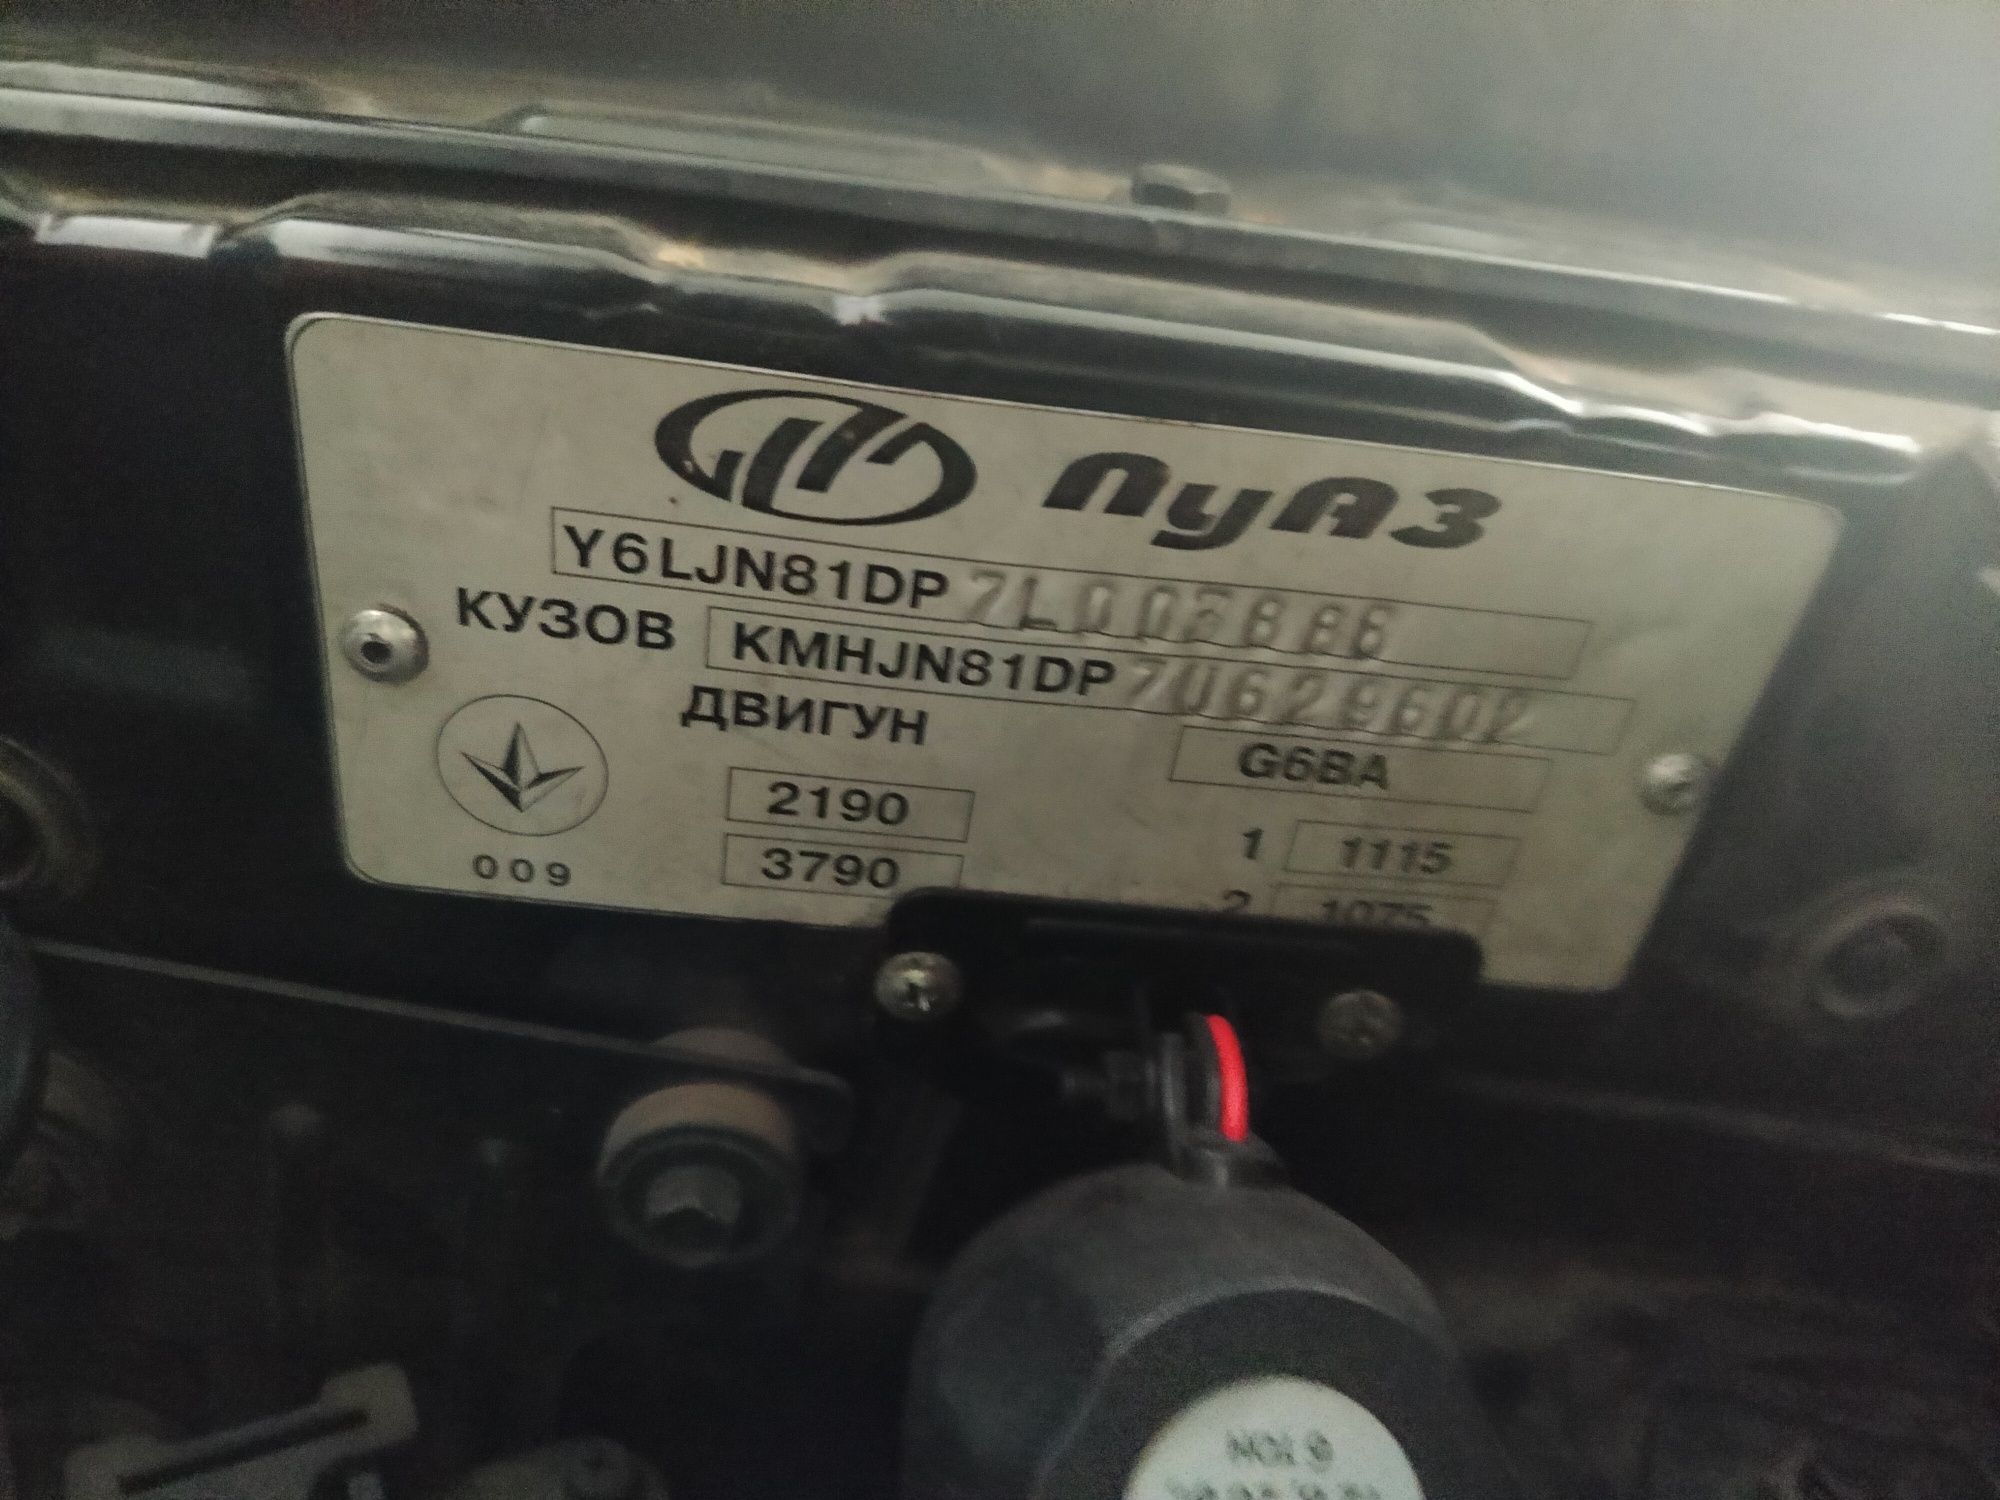 Продам Hyundai Tucson 2007 год, 2,7 AT V6 4WD Газ/бенз. Максималка.